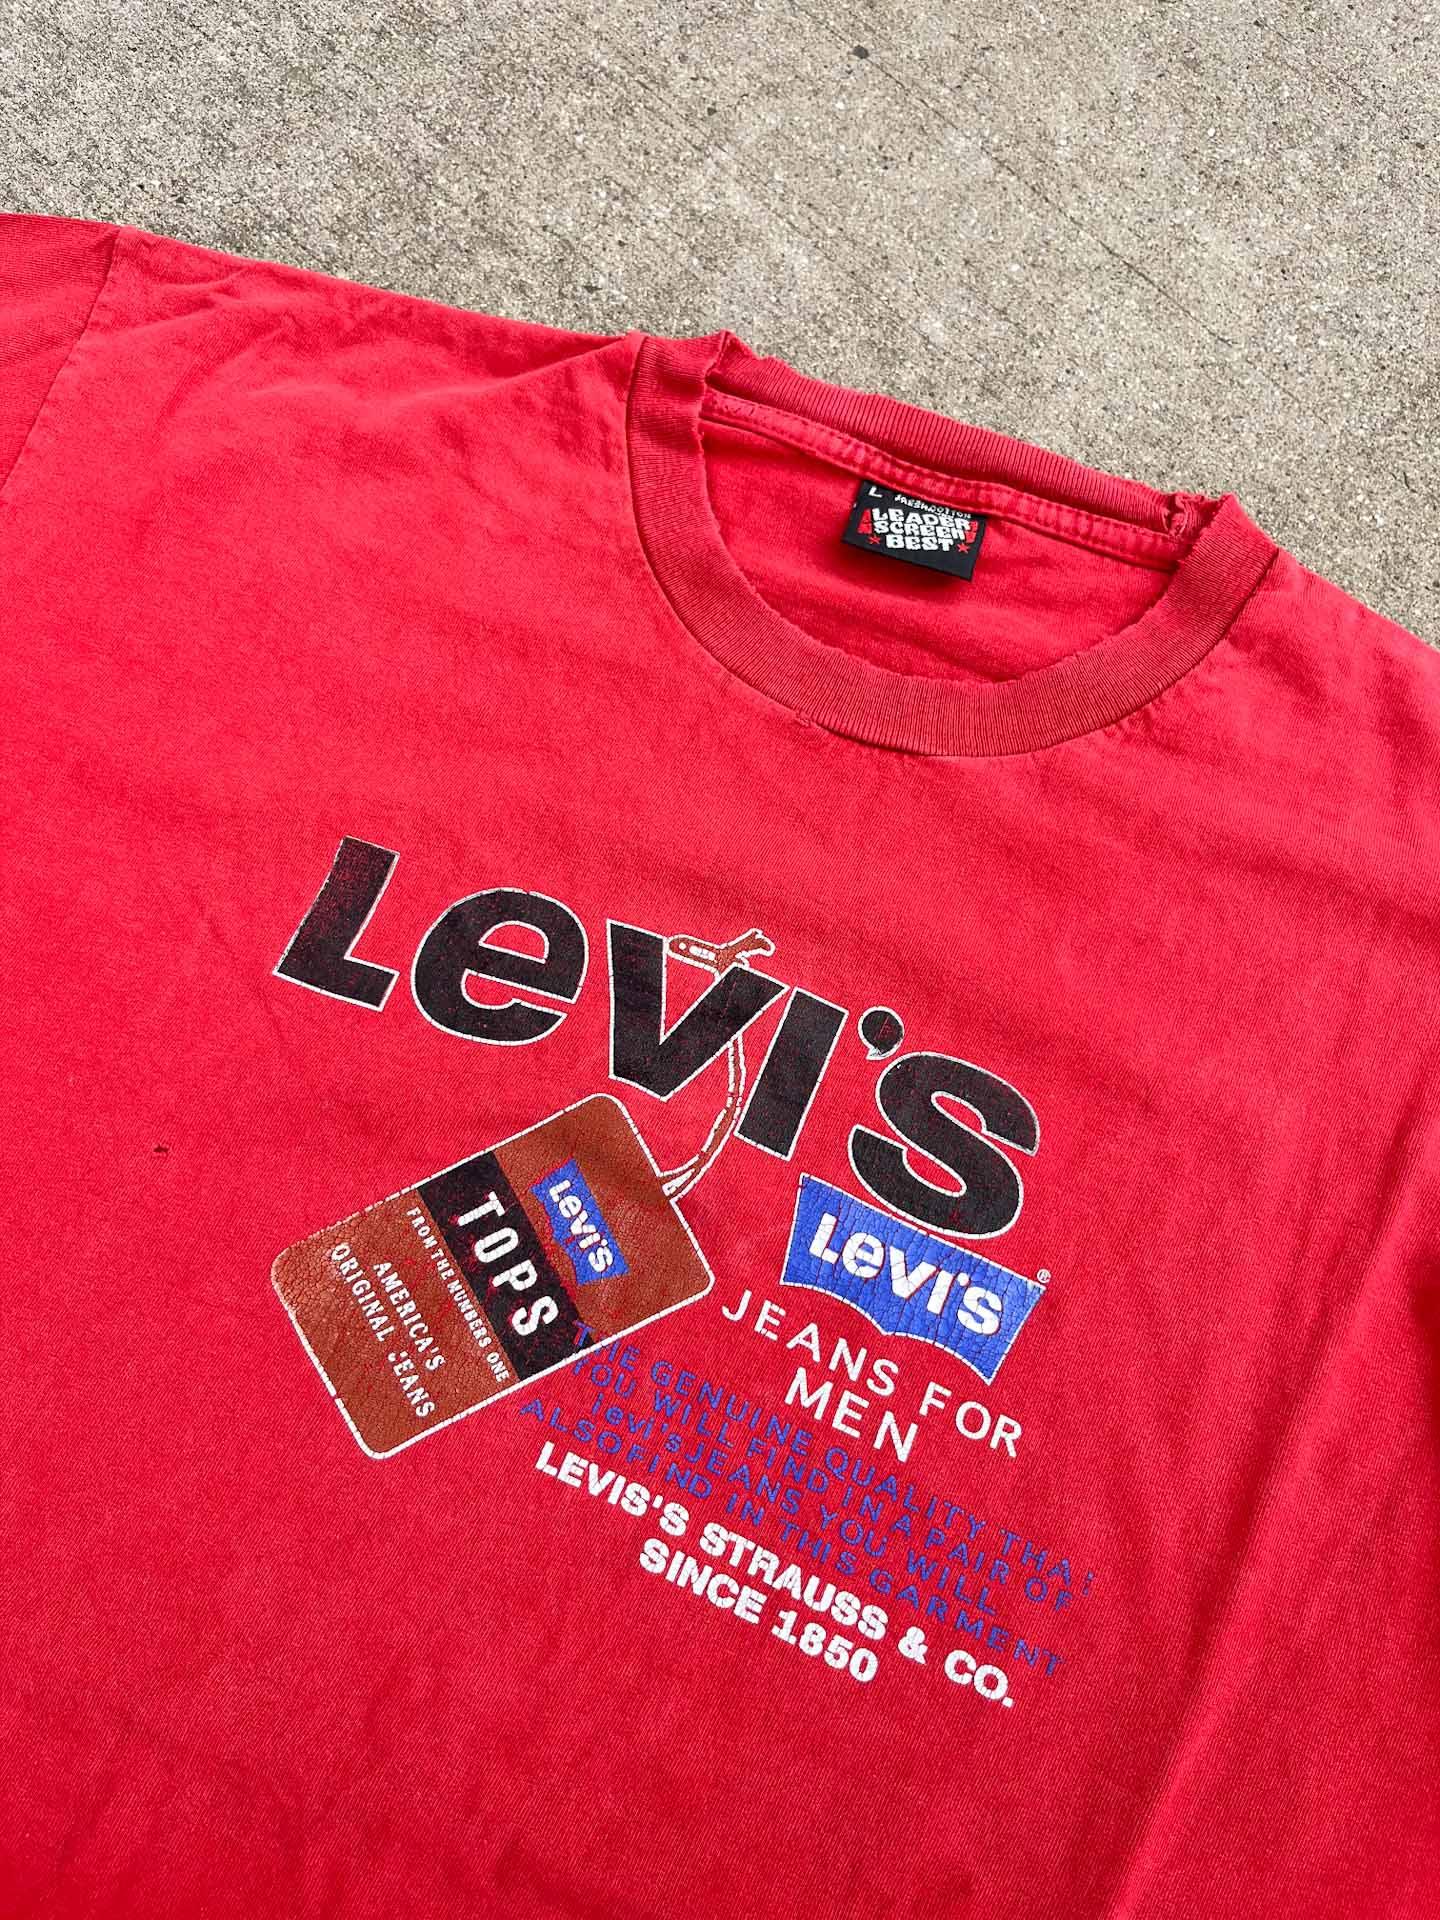 Levi’s (bootleg) T-Shirt - secondvintage